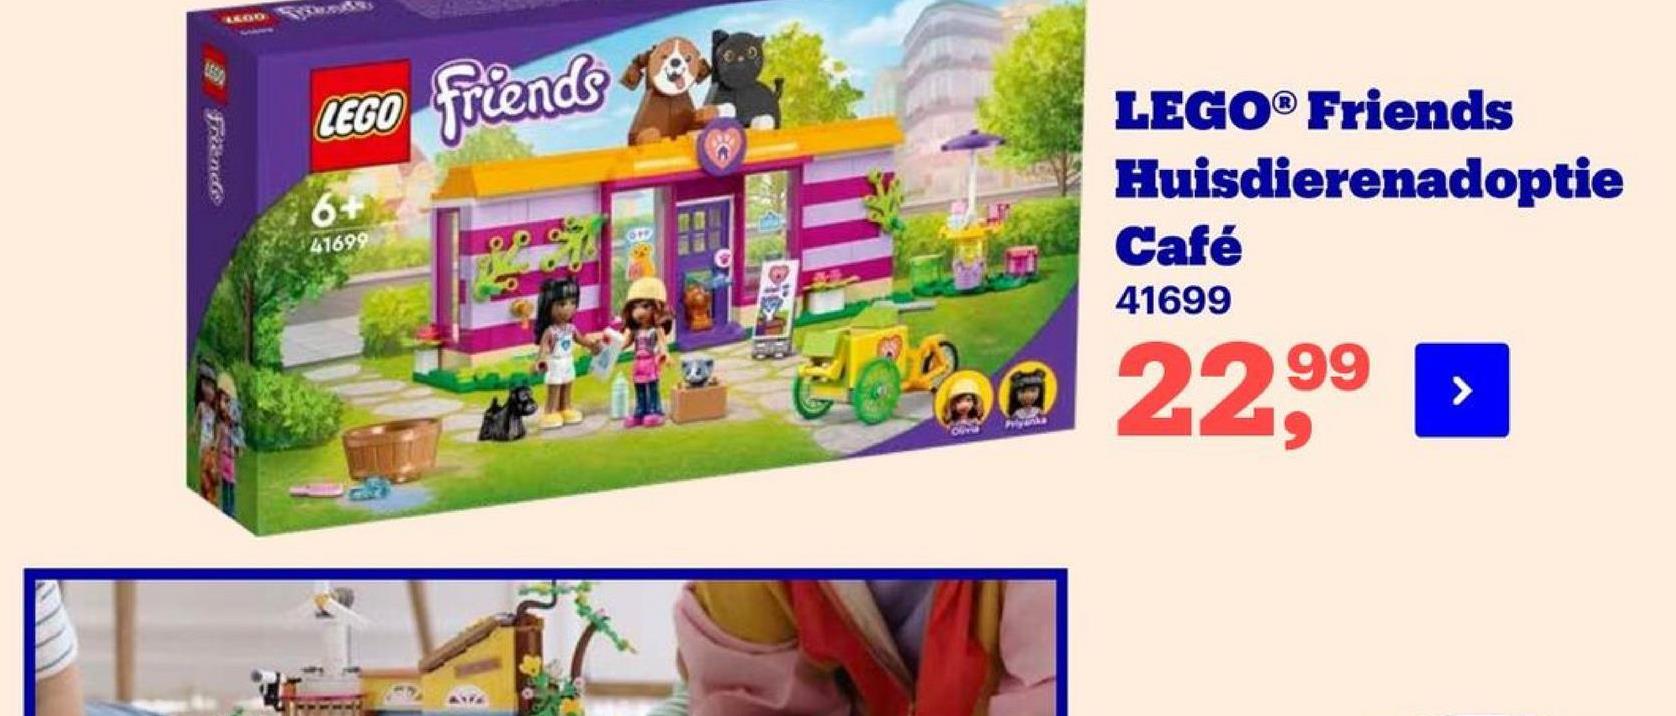 LEGO
friends
6
41699
LEGO® Friends
Huisdierenadoptie
Café
41699
2299
>
Prants
Or
